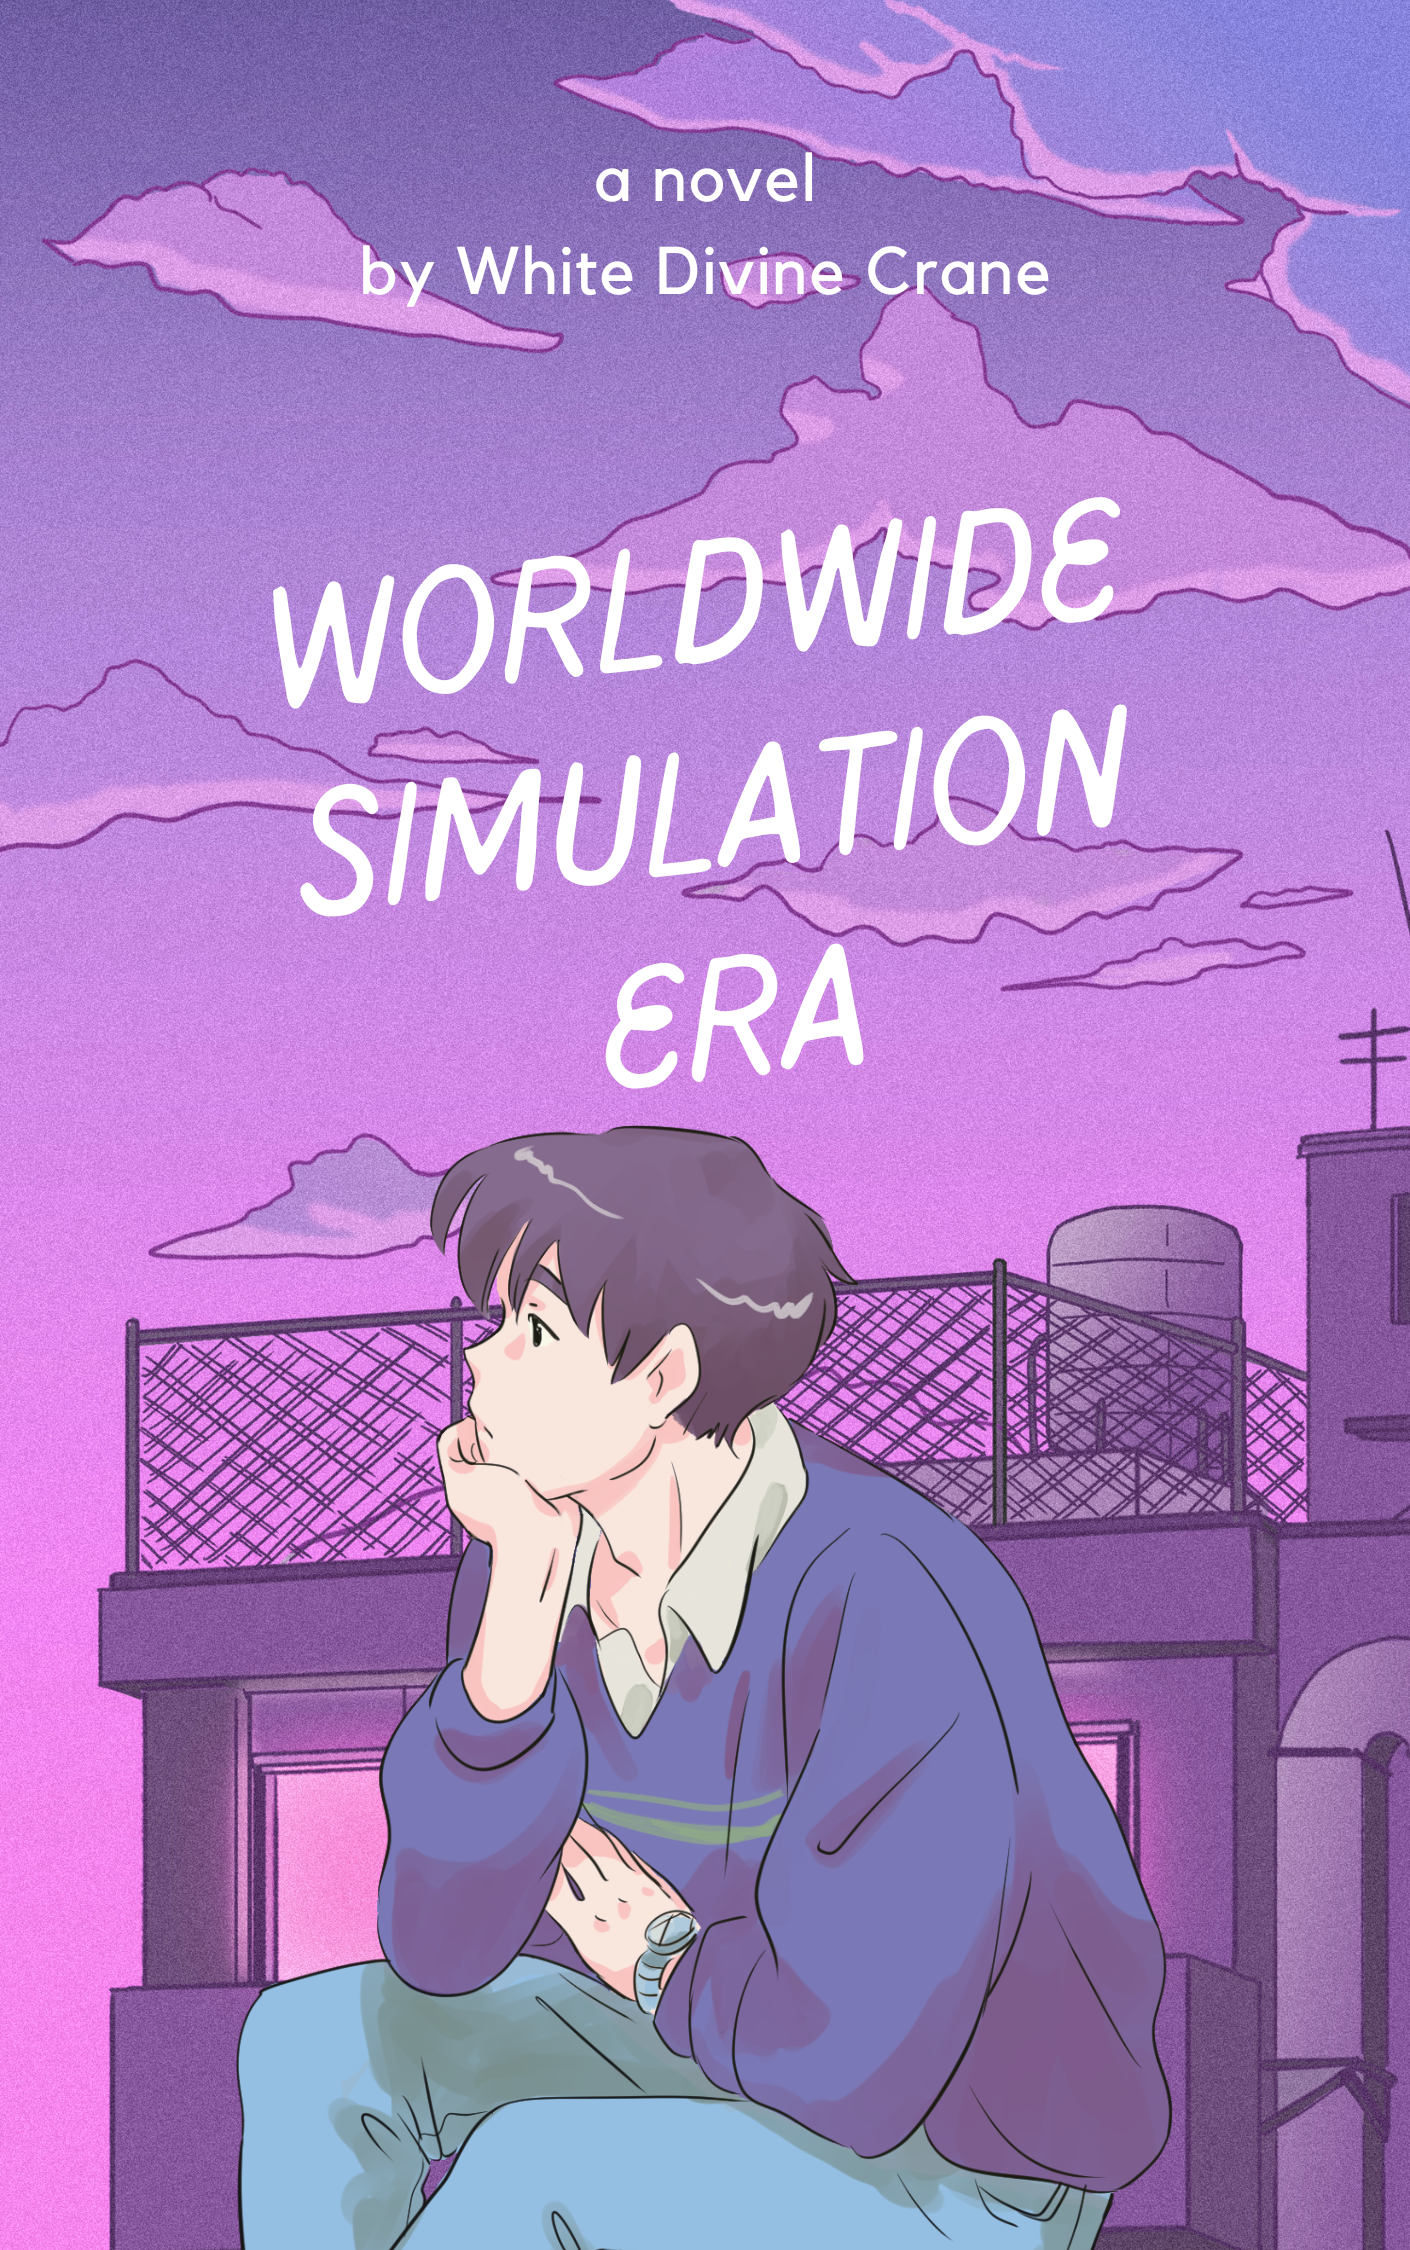 Worldwide Simulation Era